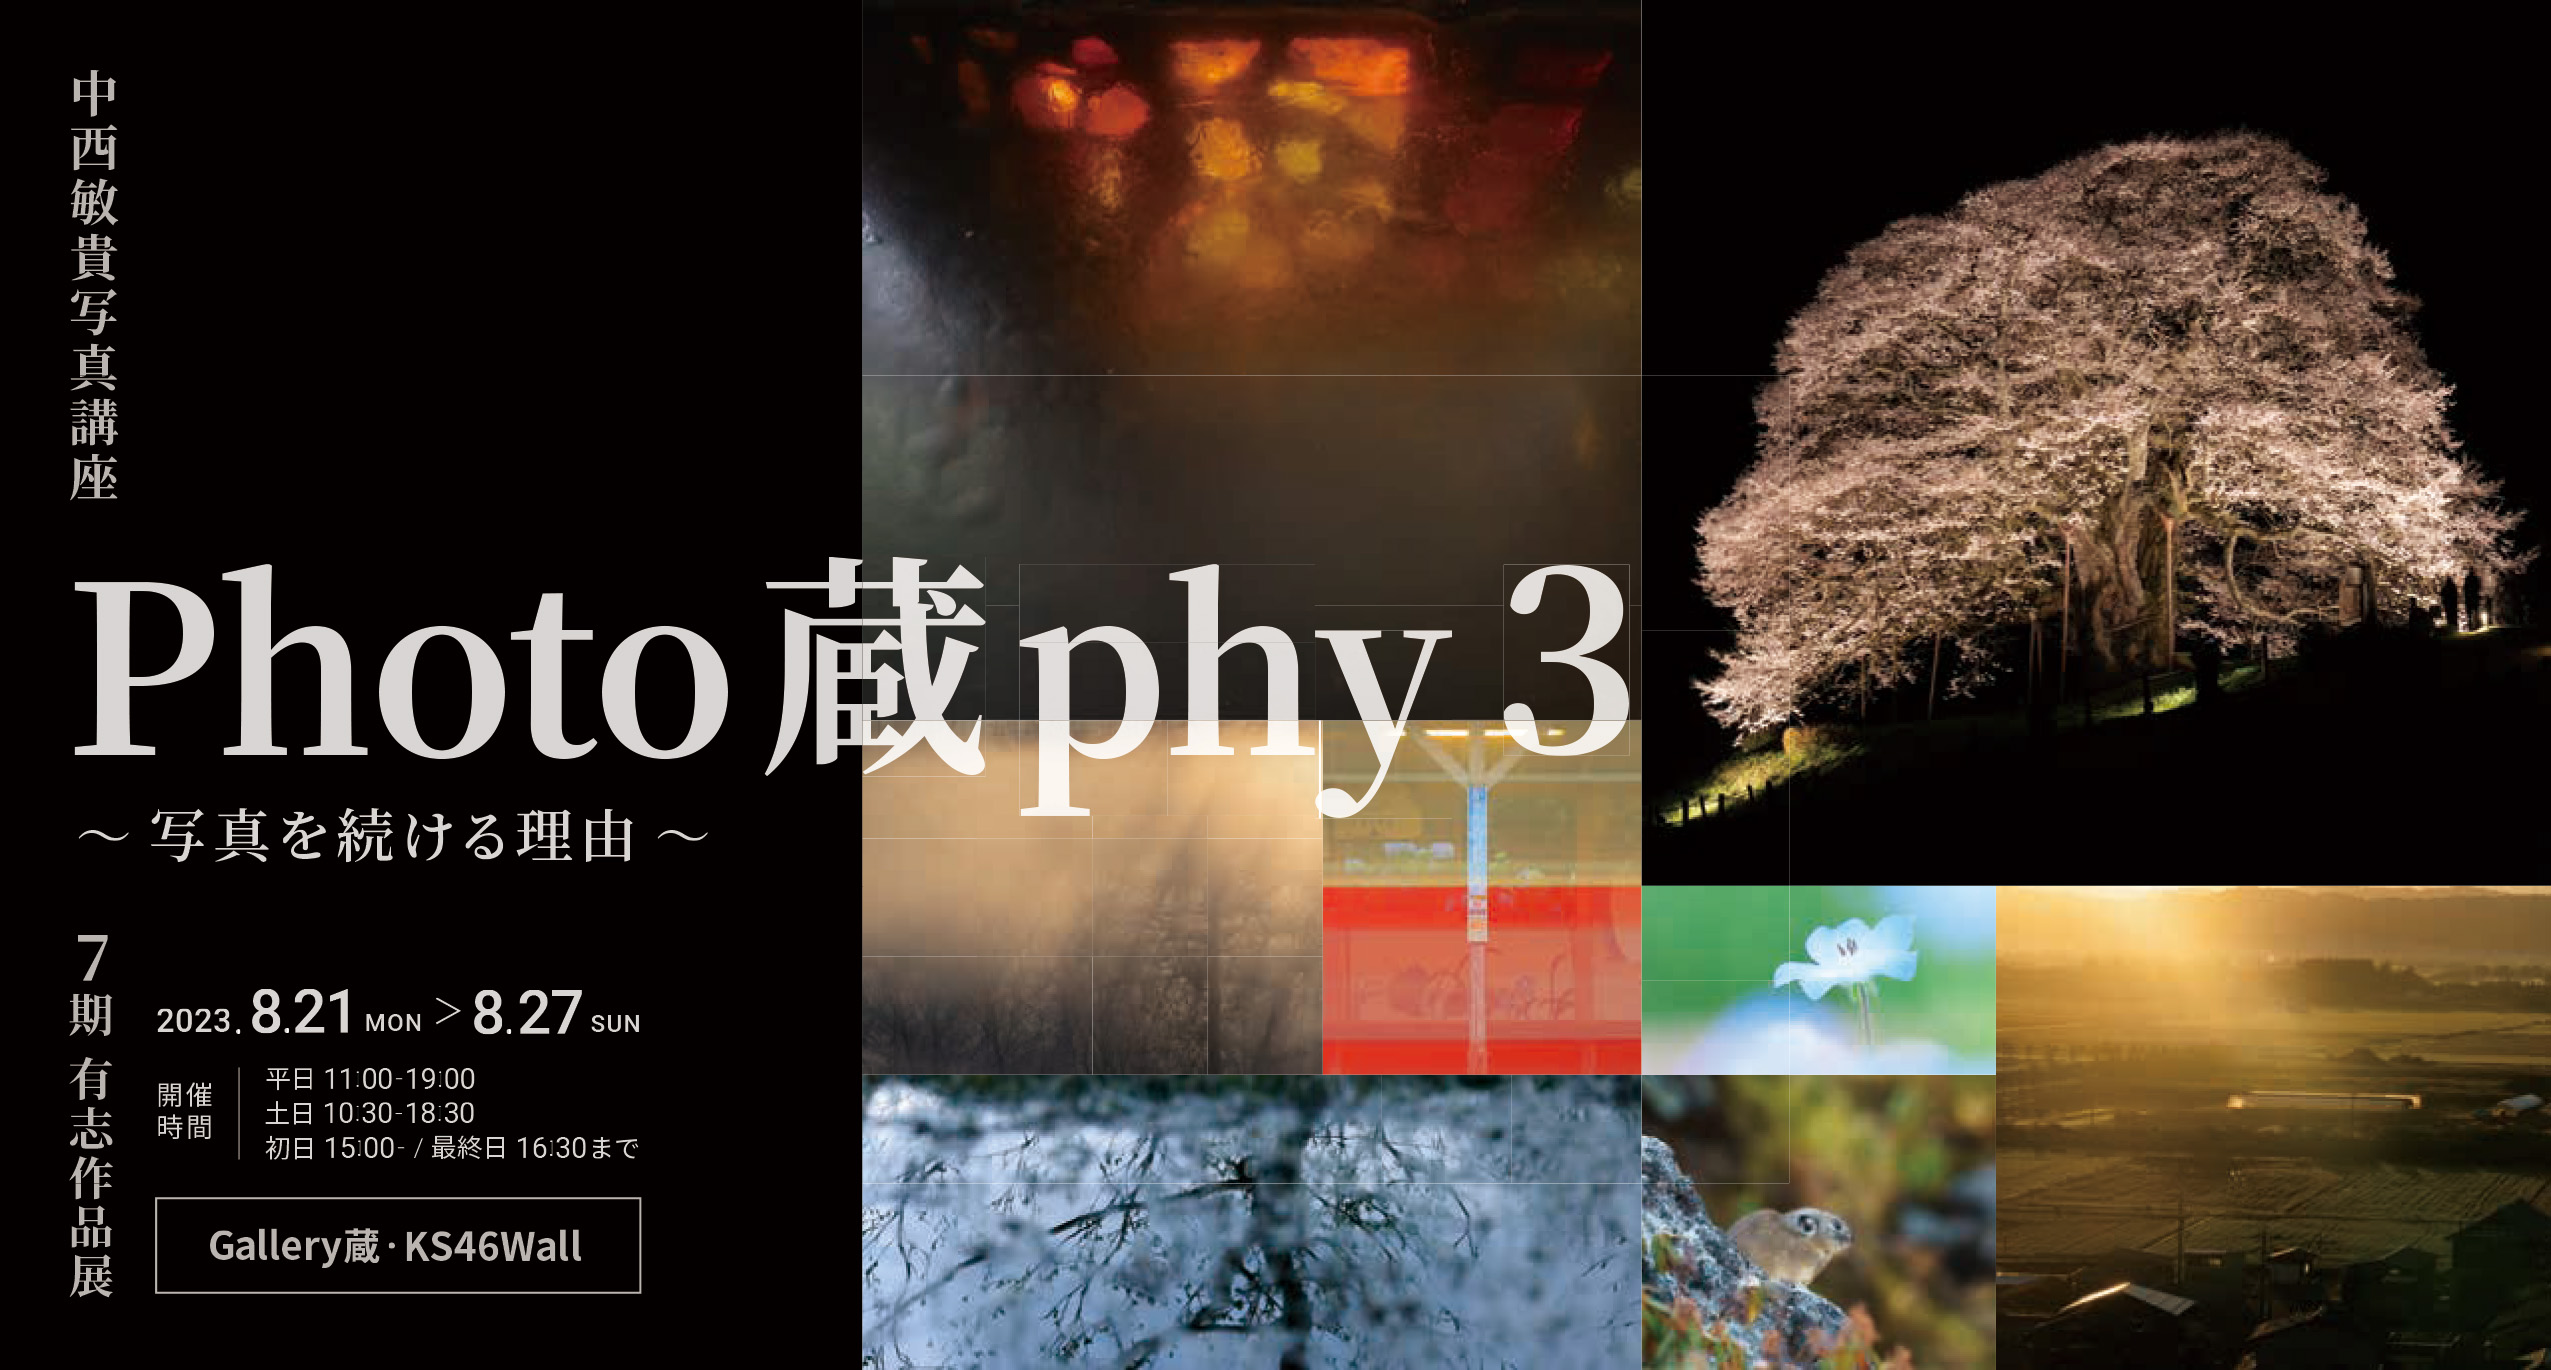 【終了】中西敏貴写真講座 7 期有志作品展 「Photo 蔵 phy3 〜写真を続ける理由〜」